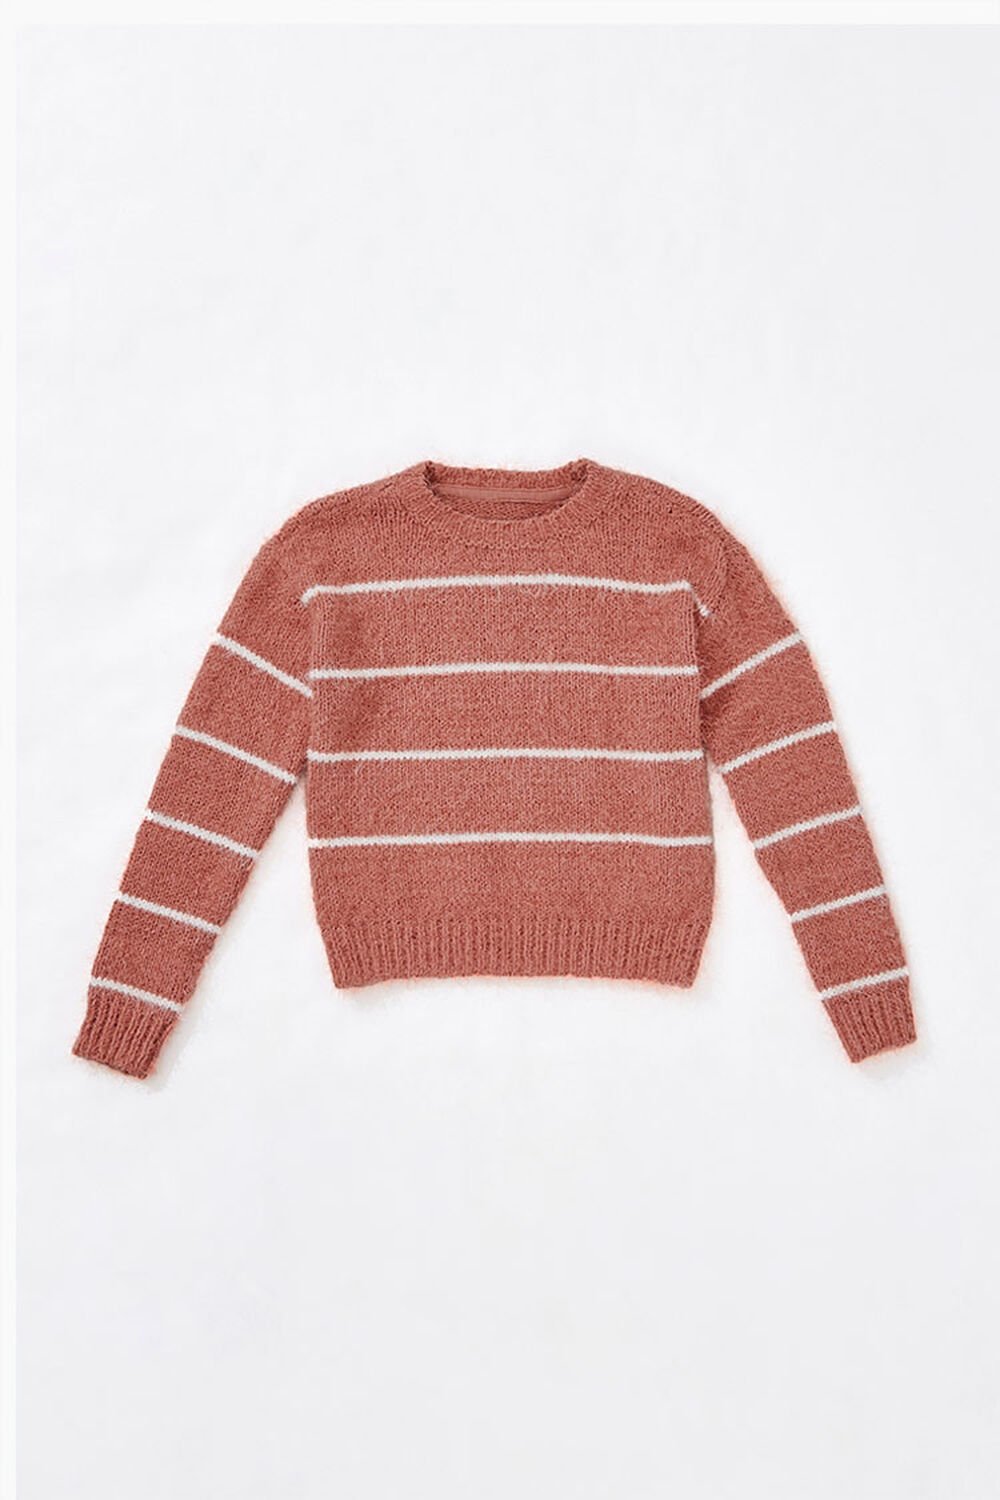 Girls Striped Sweater (Kids), image 1